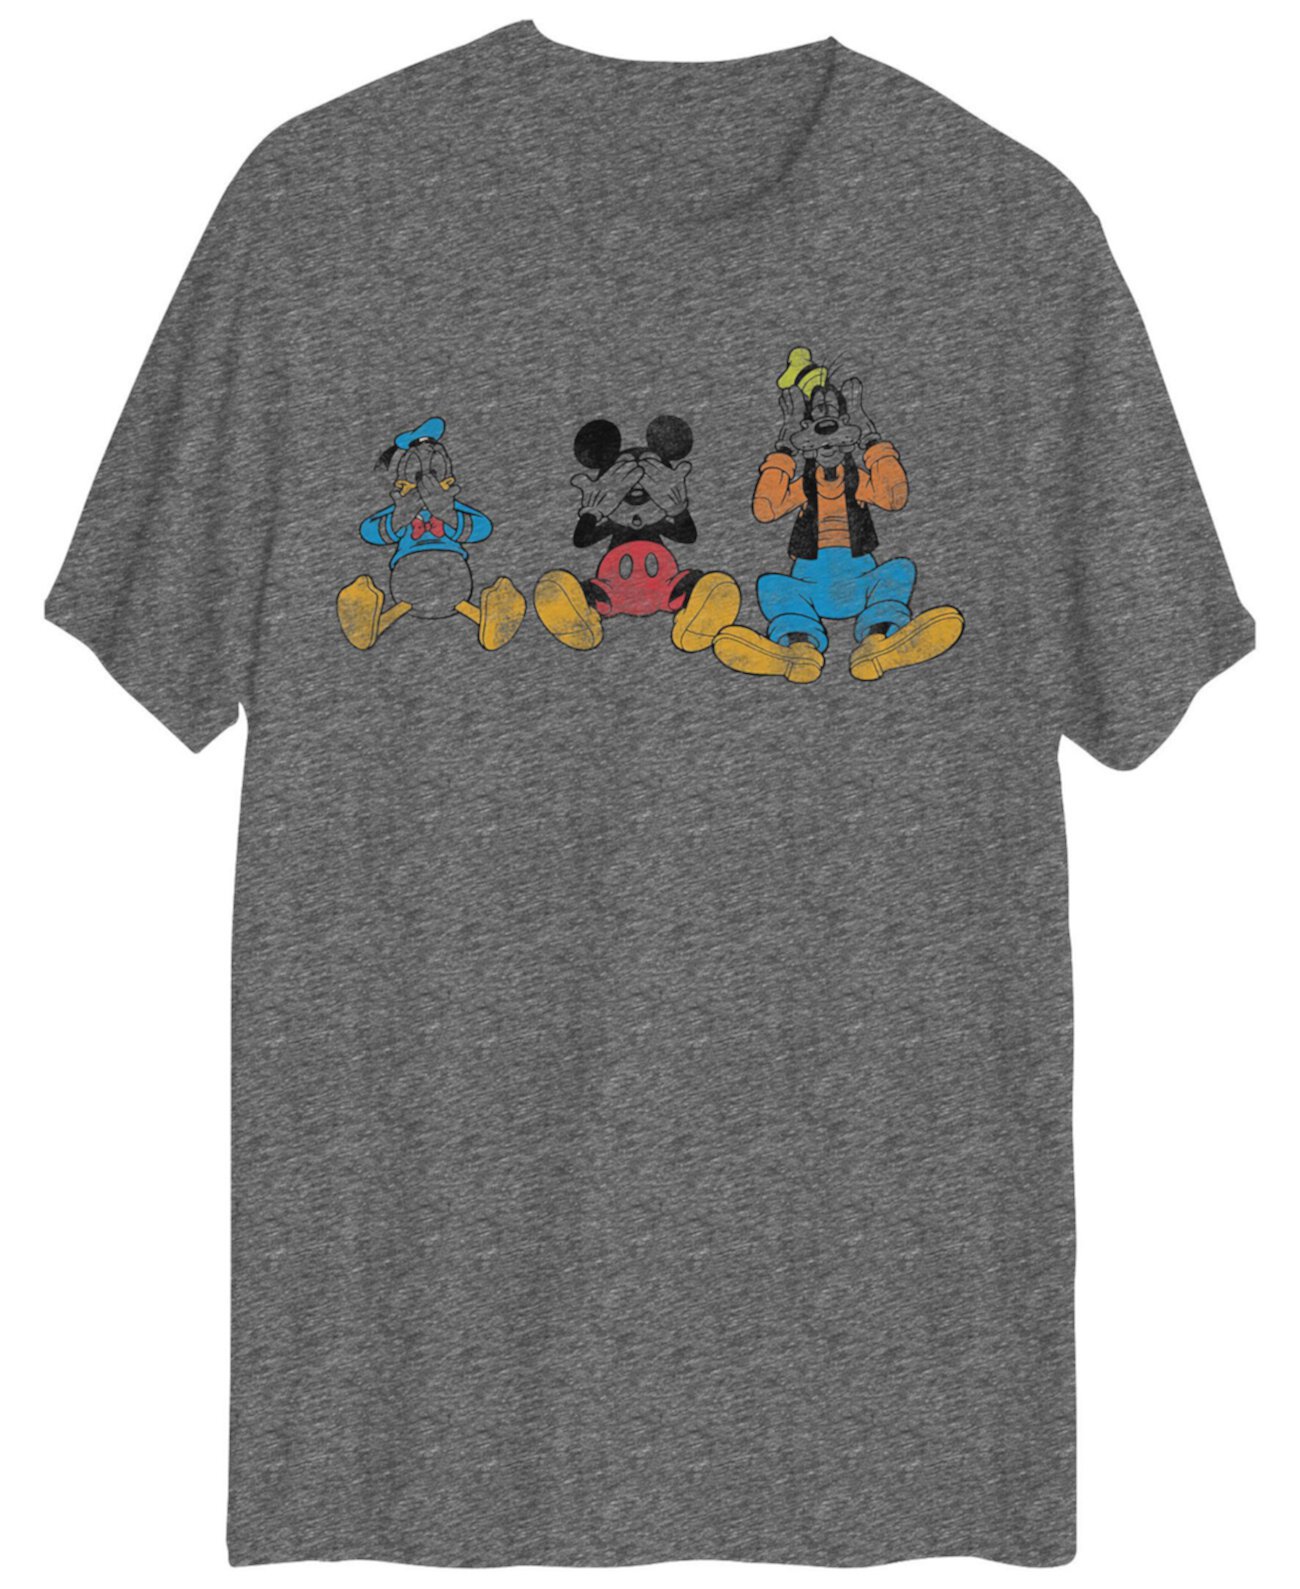 Мужская футболка Donald Duck Mickey Mouse & Goofy от Jem Hybrid